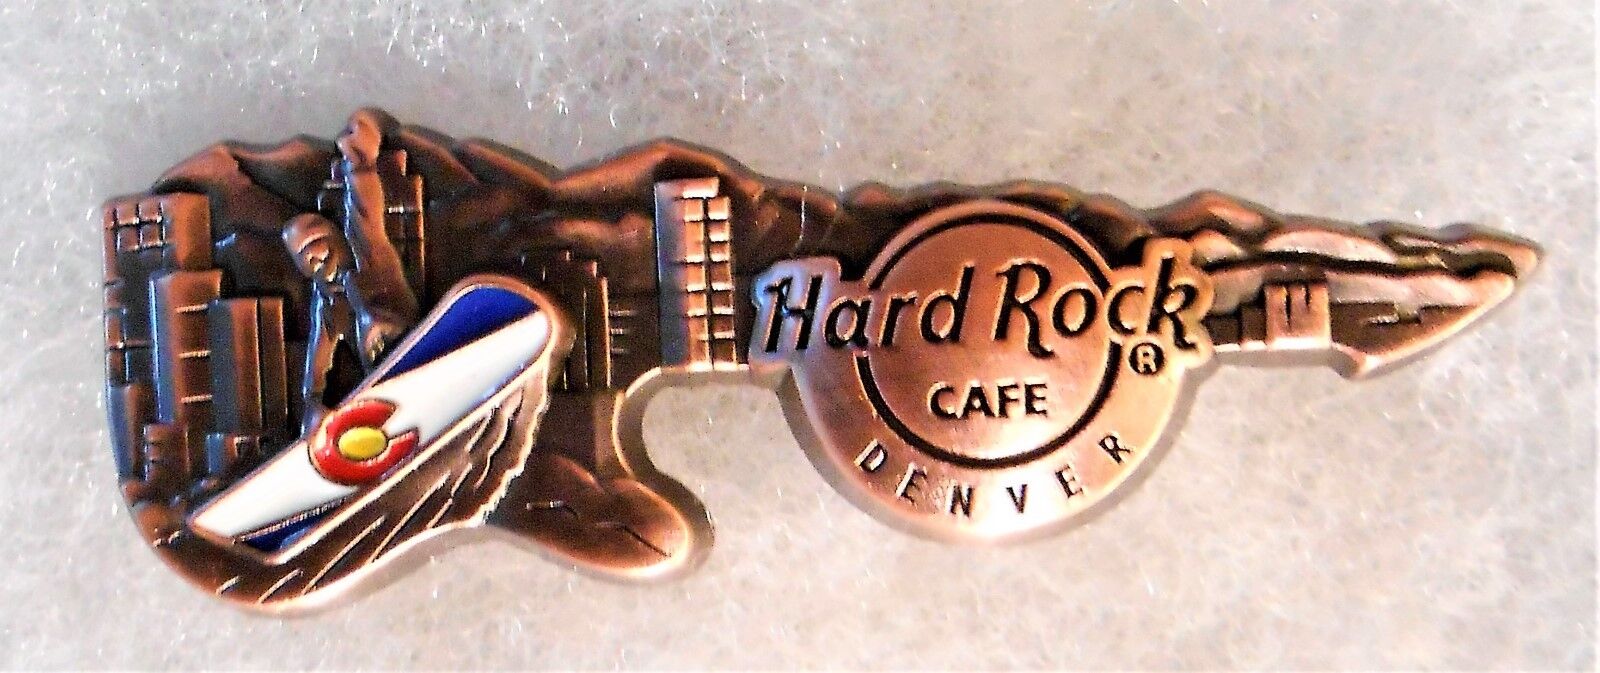 HARD ROCK CAFE DENVER 3D BRONZE SKYLINE GUITAR SERIES PIN # 95601